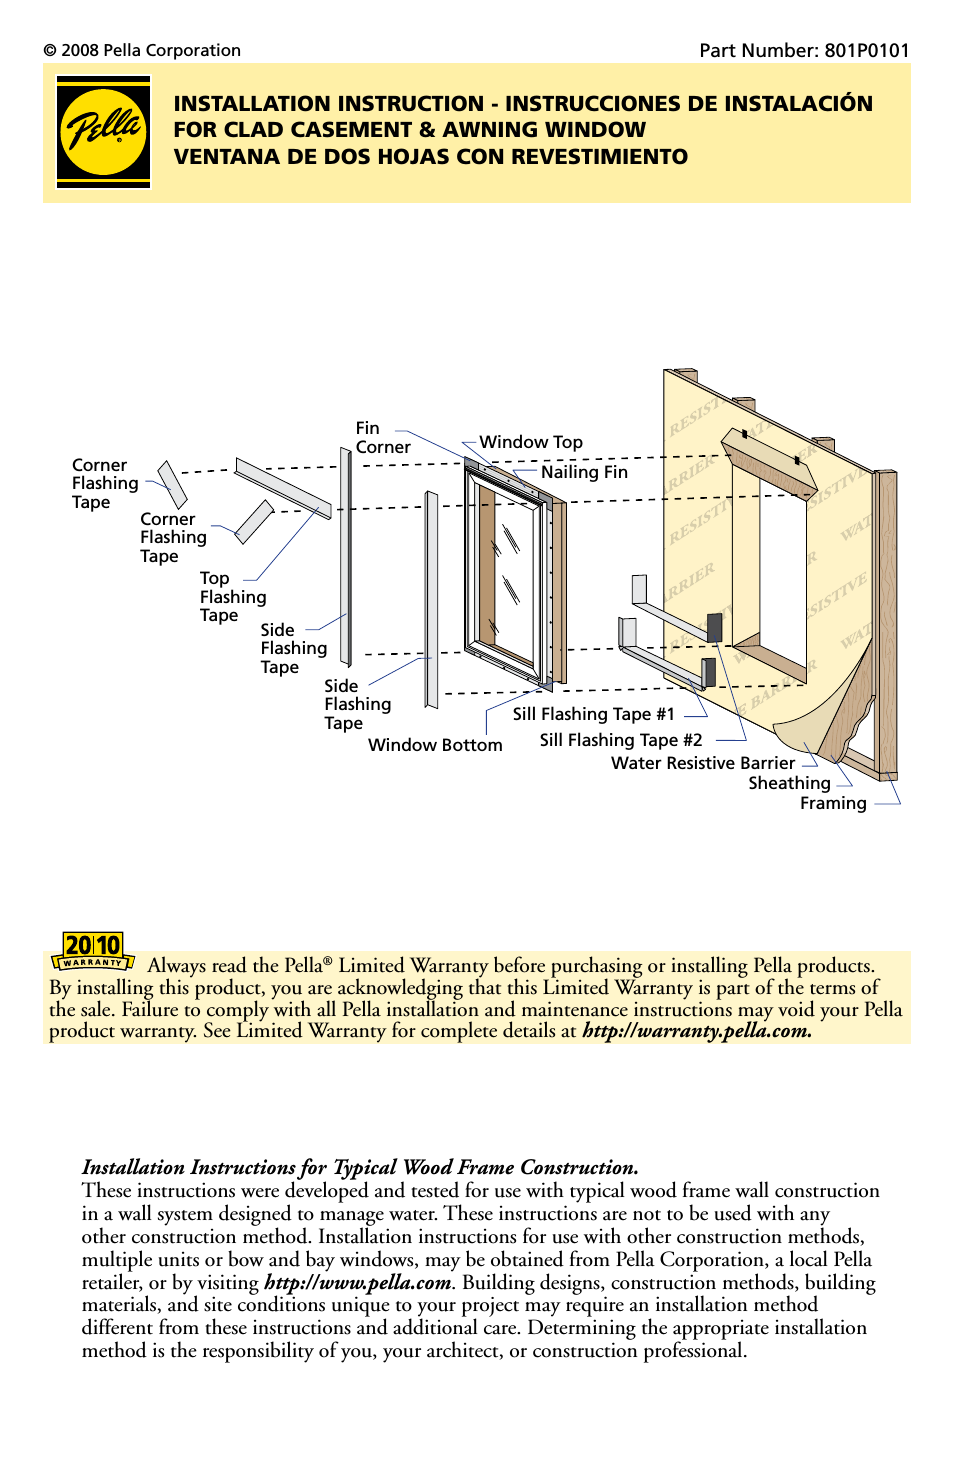 Clad Casement & Awning Window 801P0101